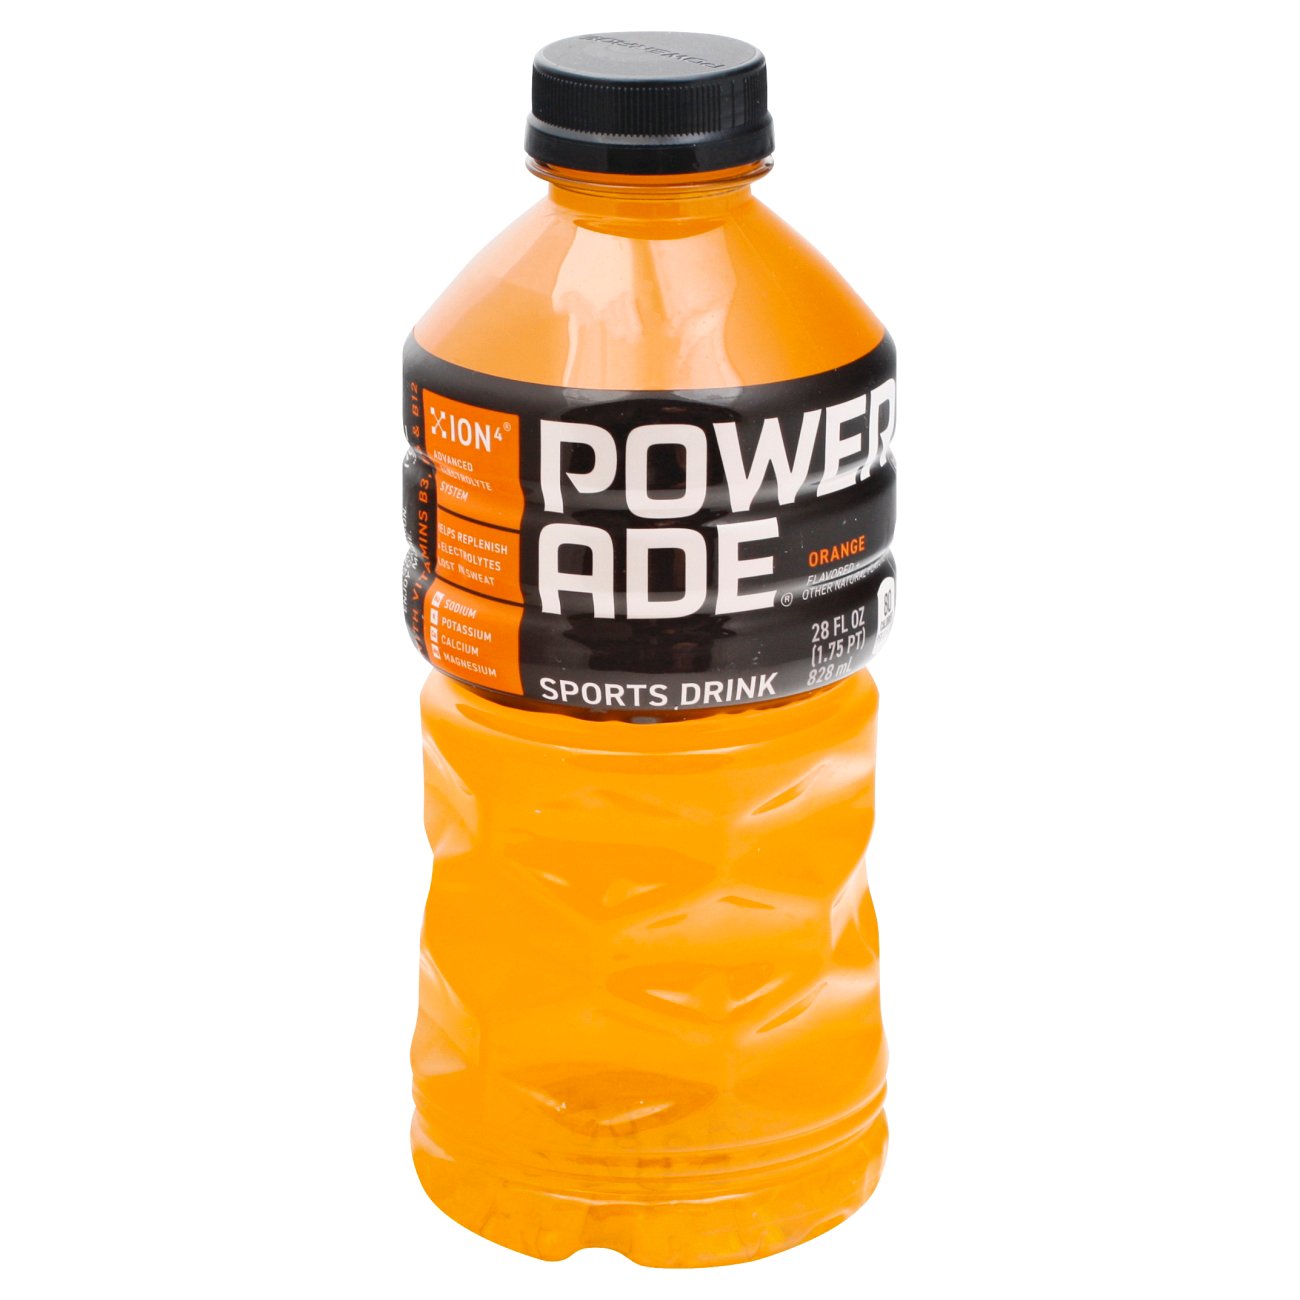 Powerade Orange Sports Drink - Shop Sports & Energy Drinks ...
